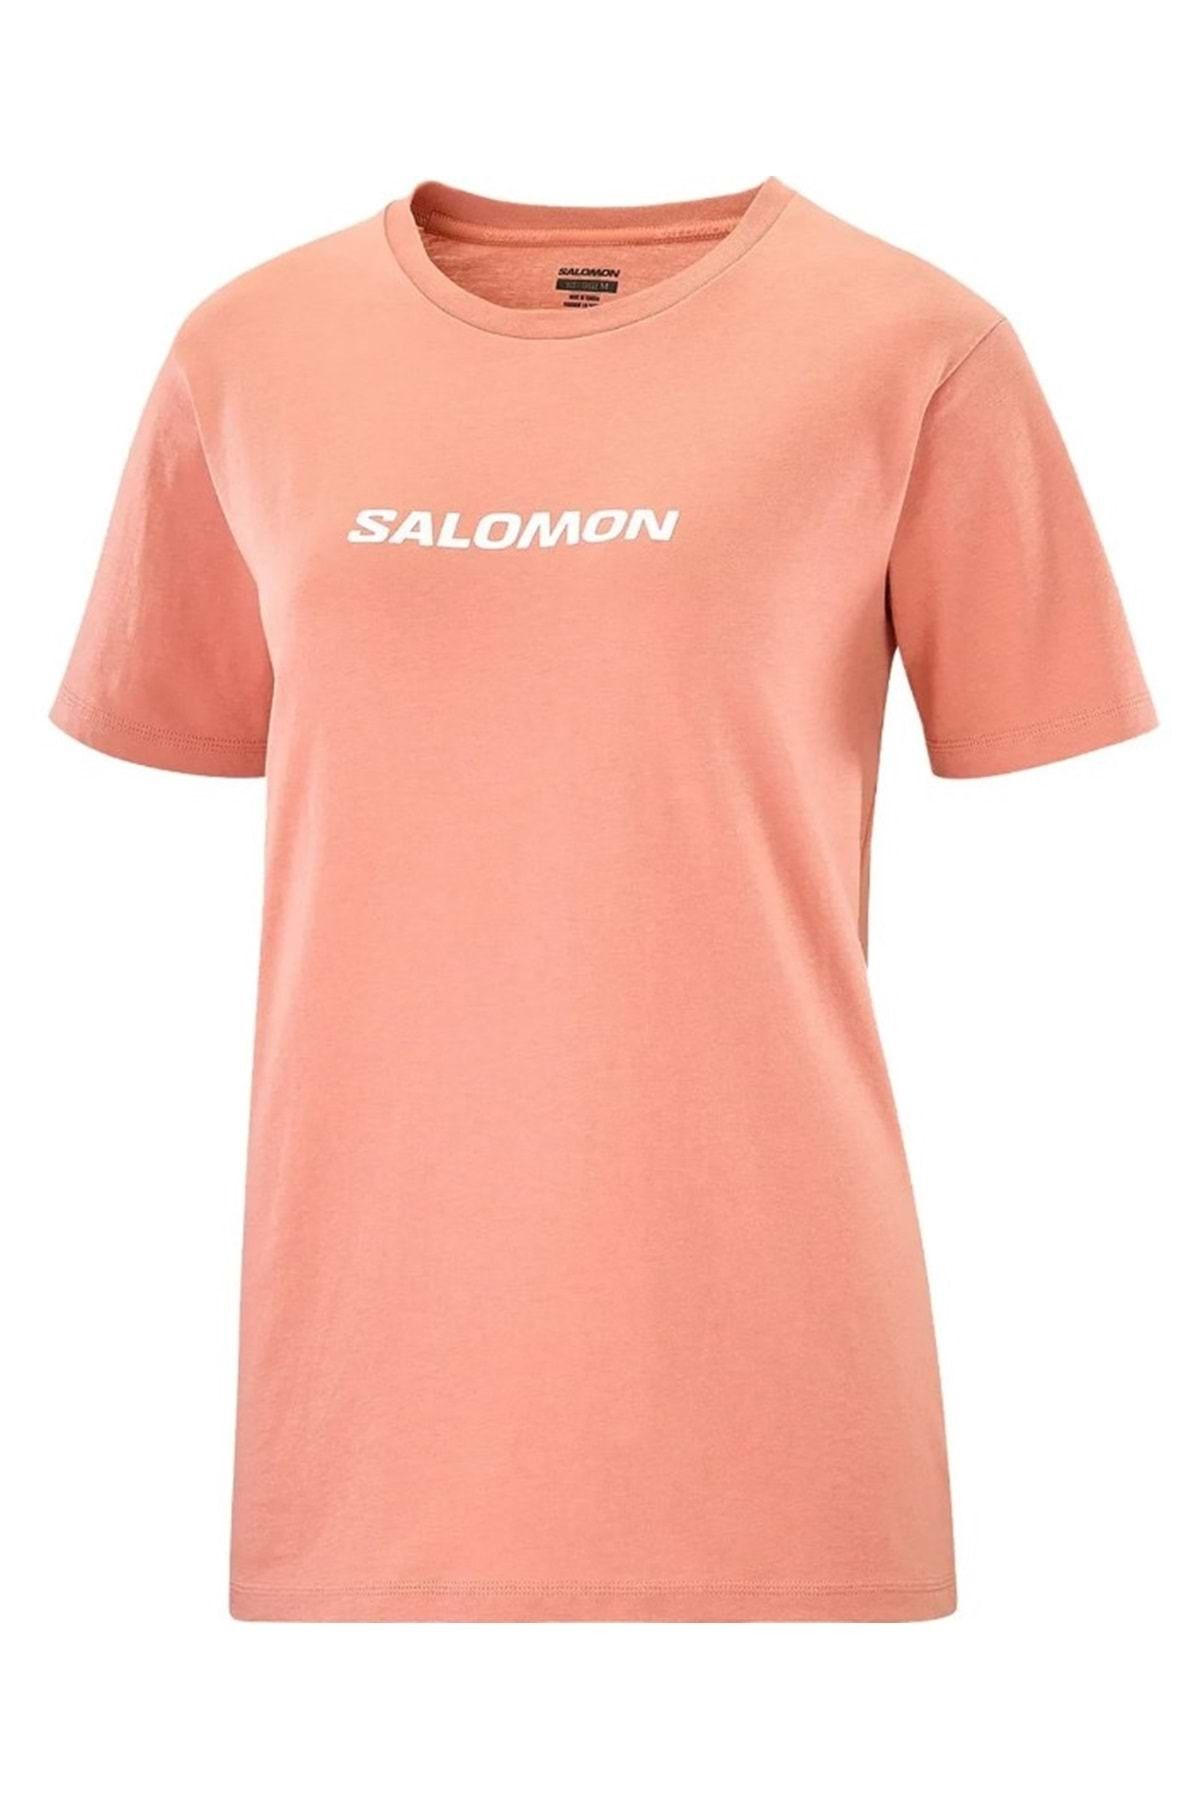 Salomon Lc2217 Logo Ss Tee W Tişört Kadın T-shirt Pembe